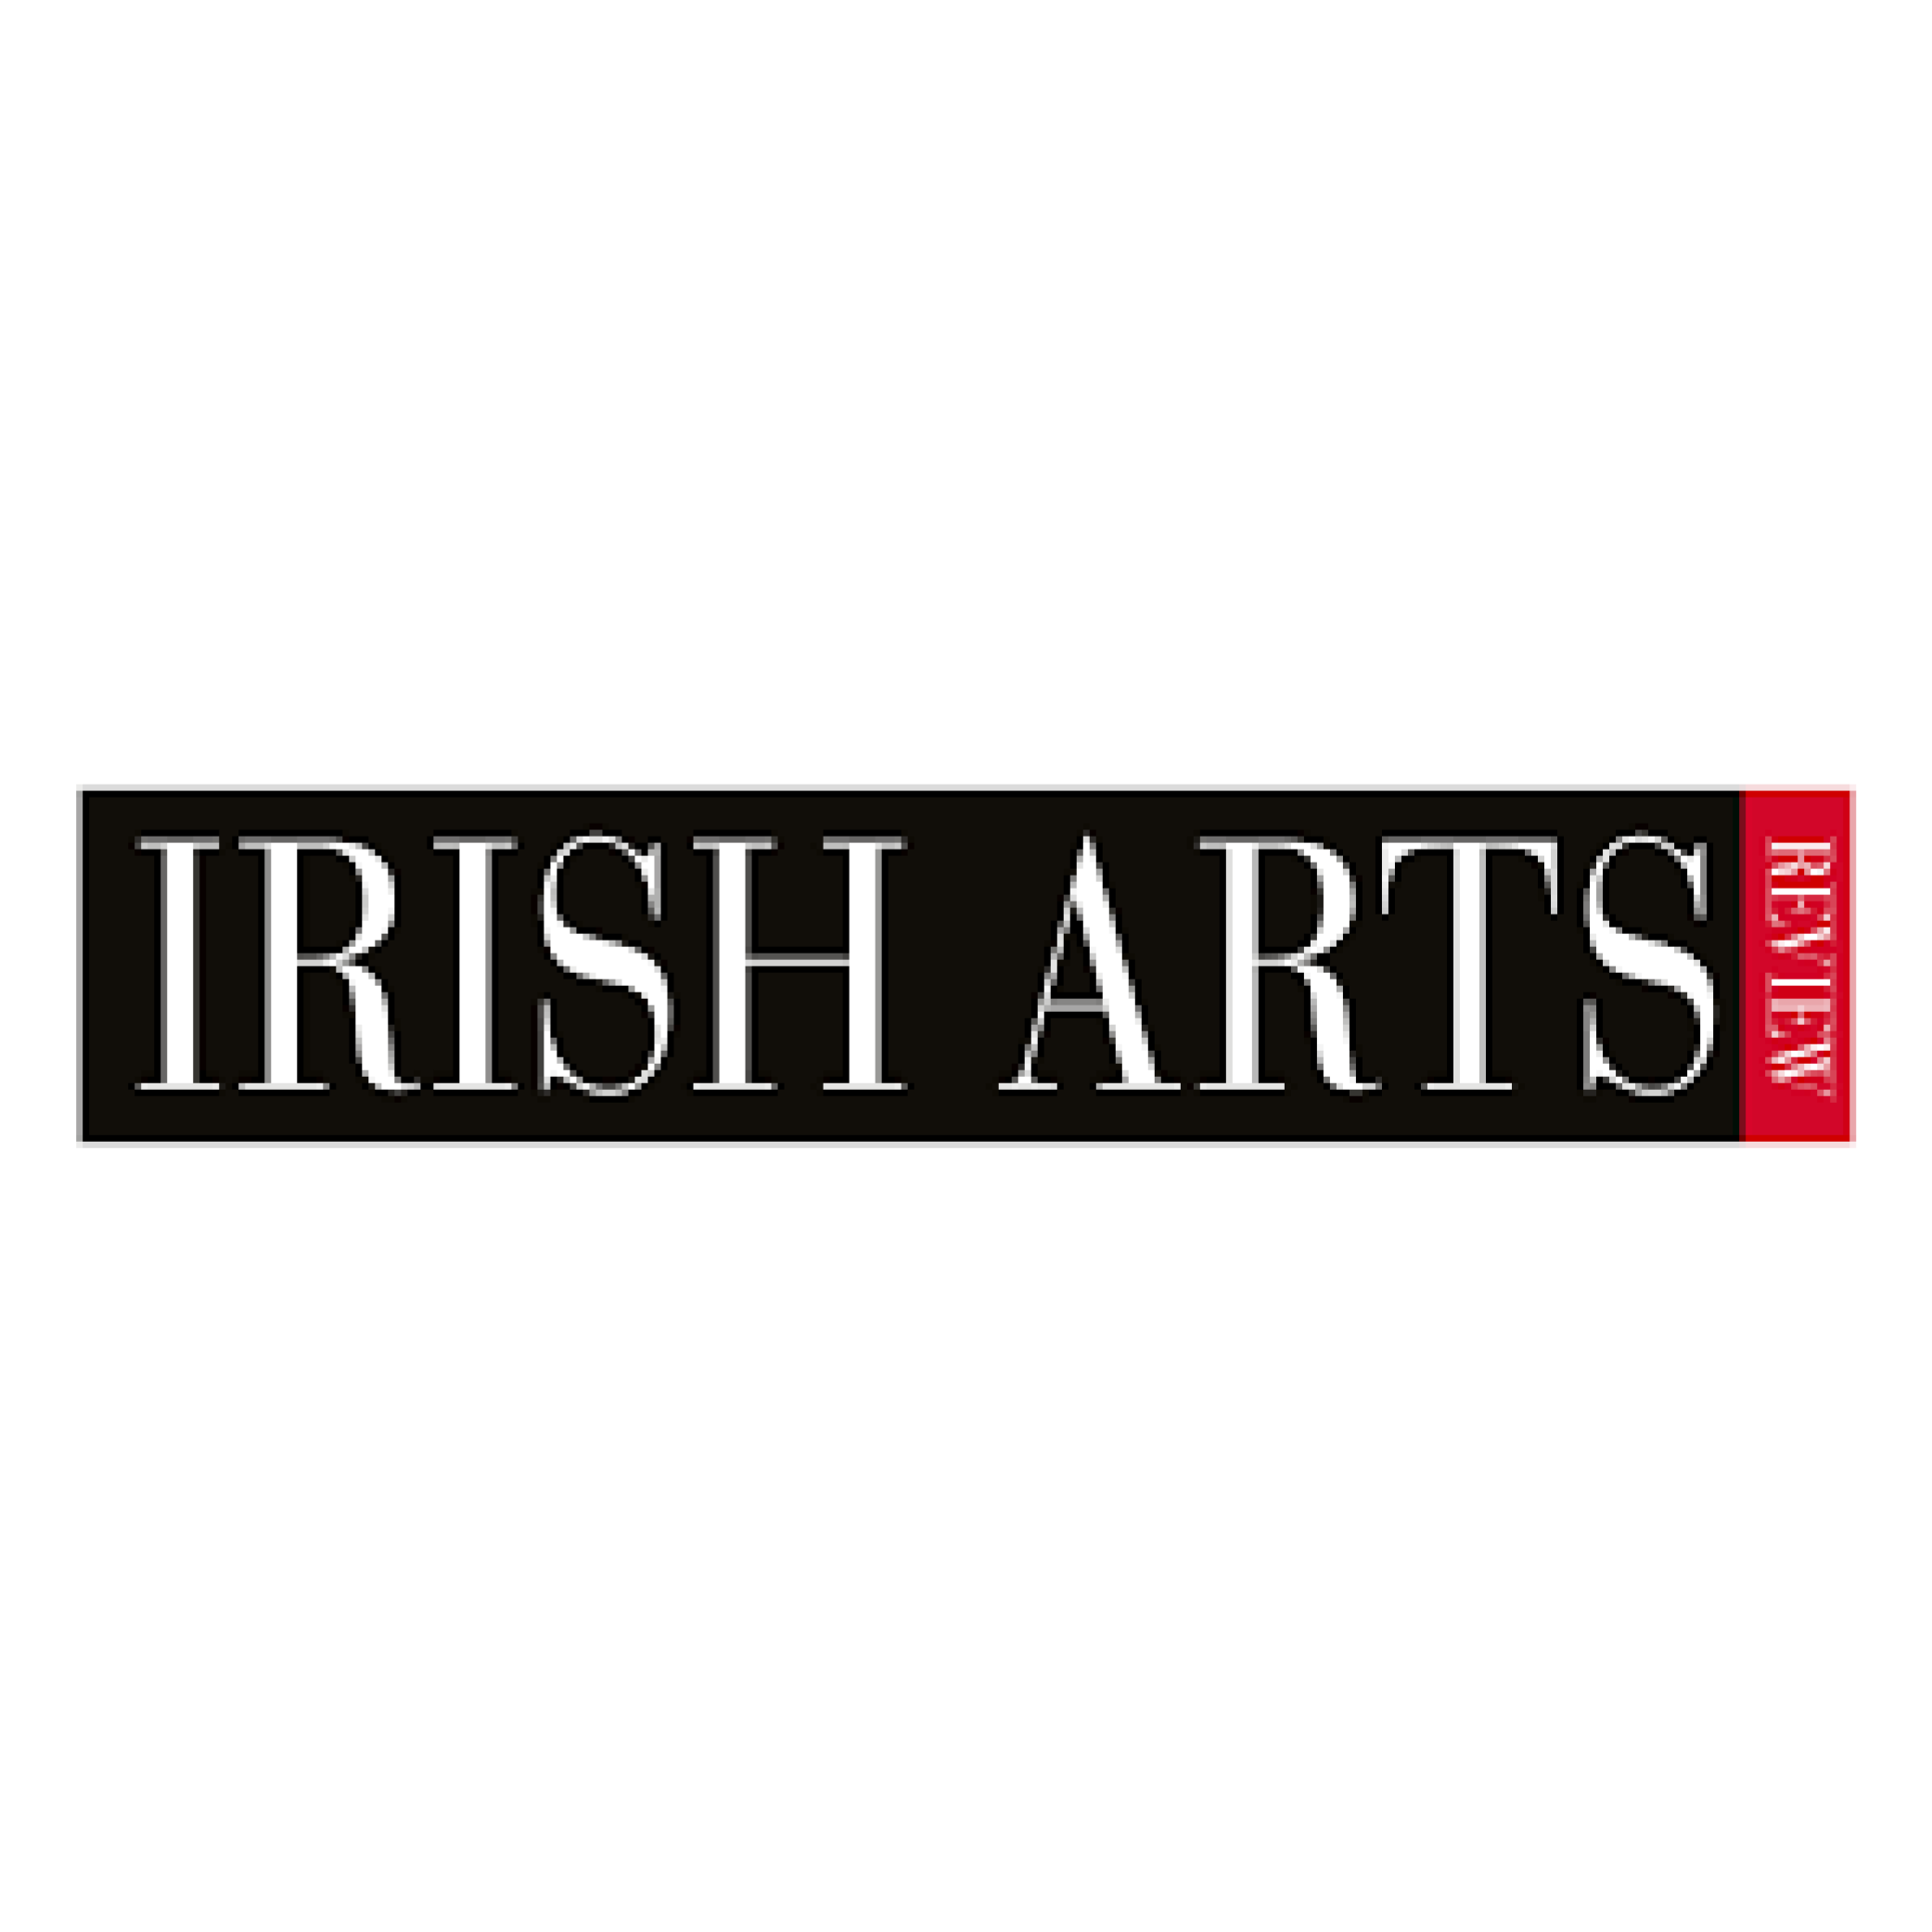 Irish-arts-review-logo